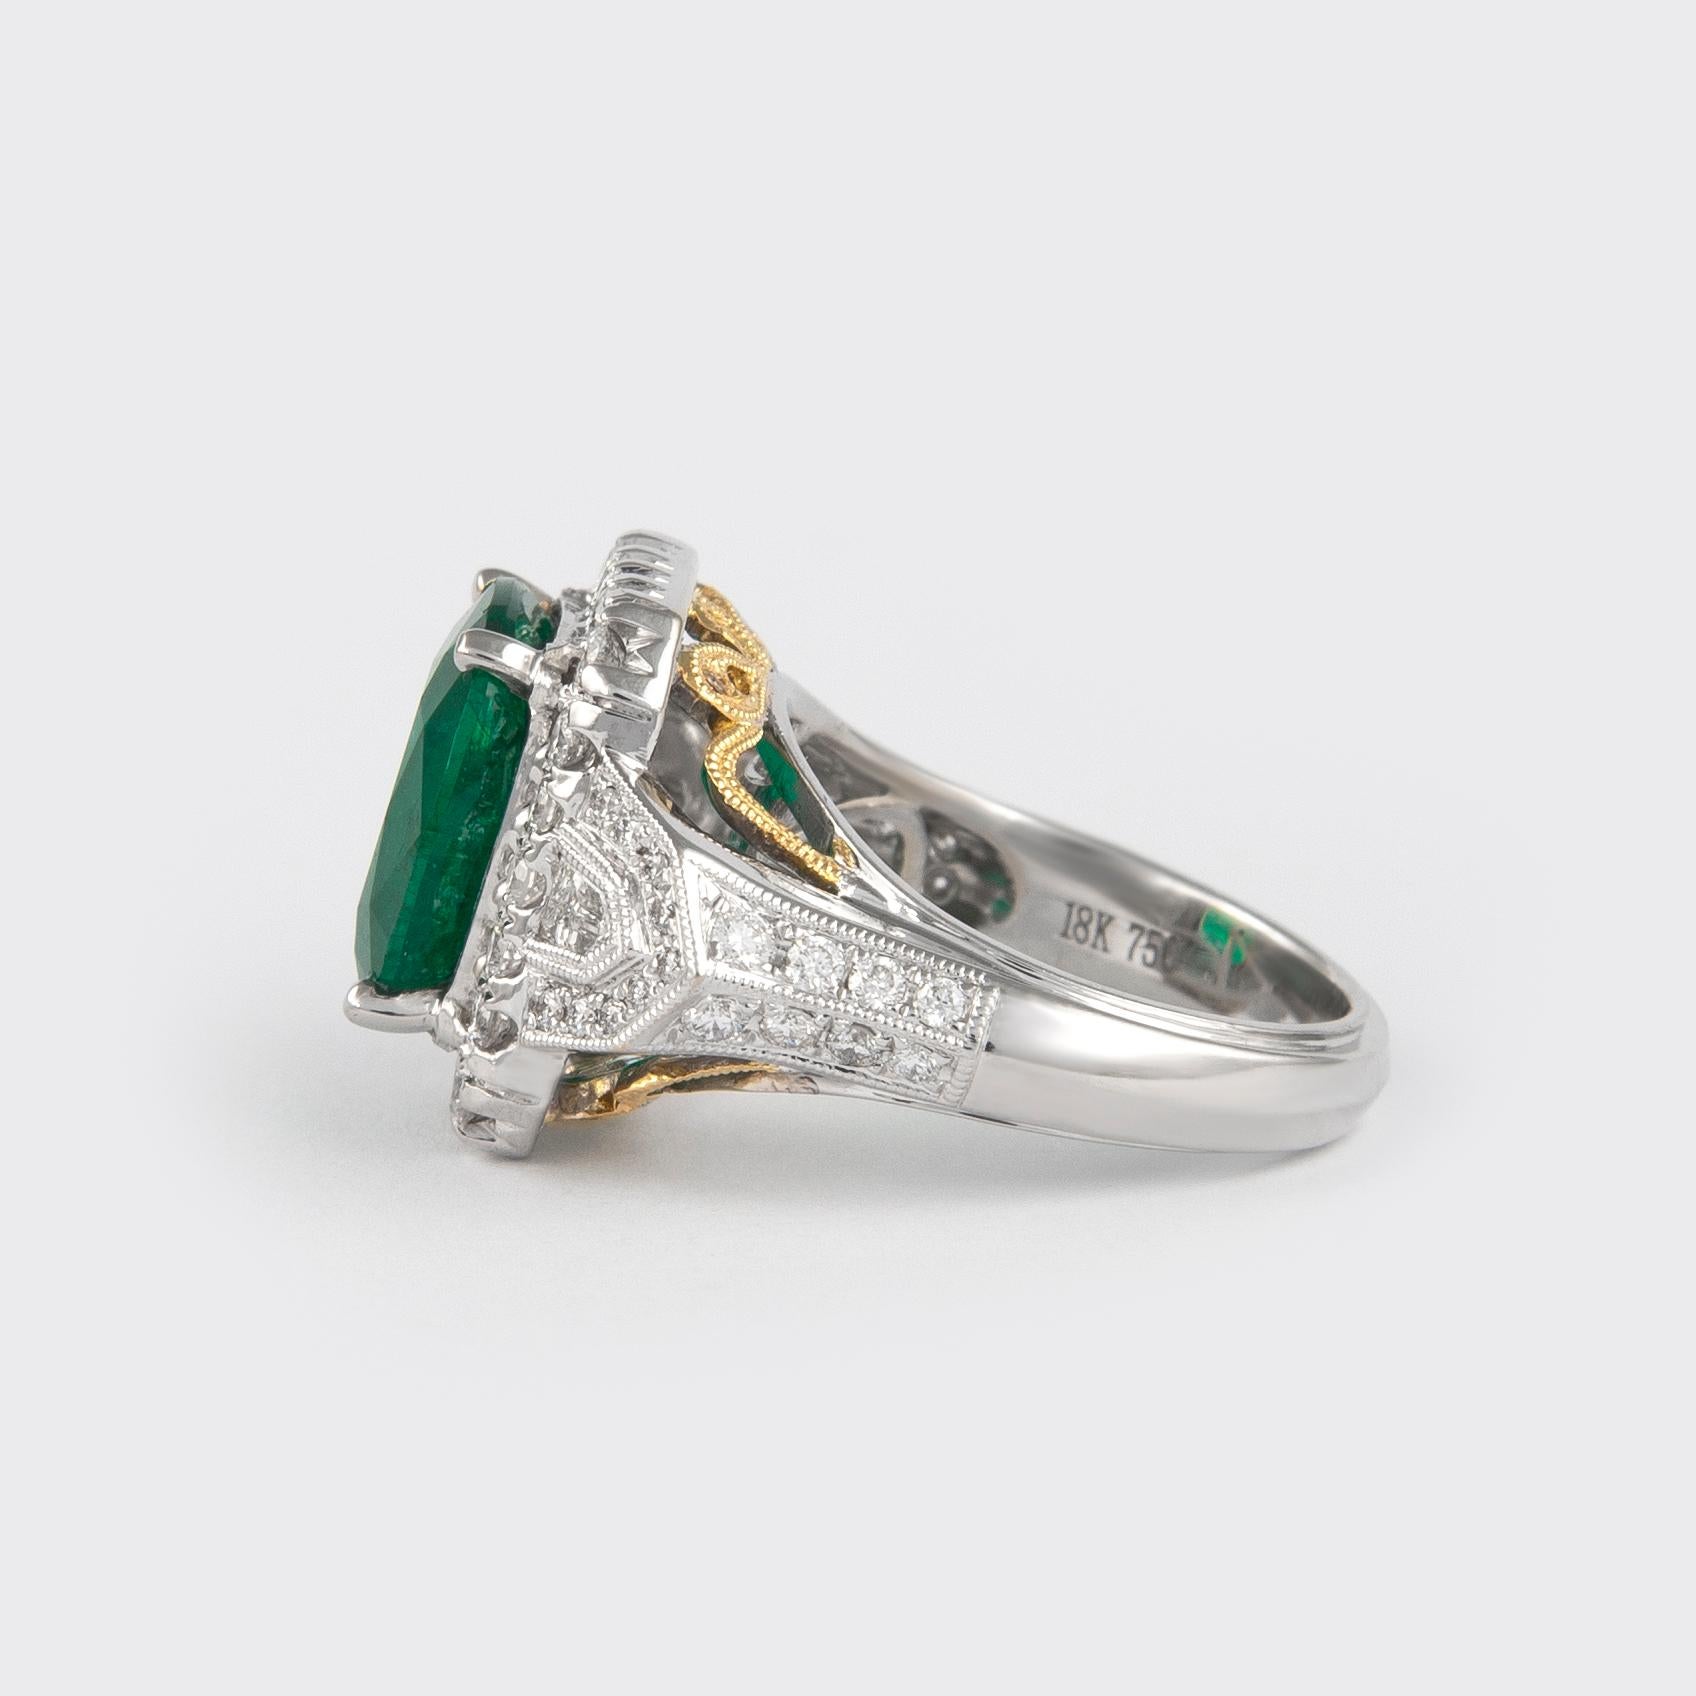 Cushion Cut 5.53 Carat Emerald with Diamond Ring 18 Karat Gold